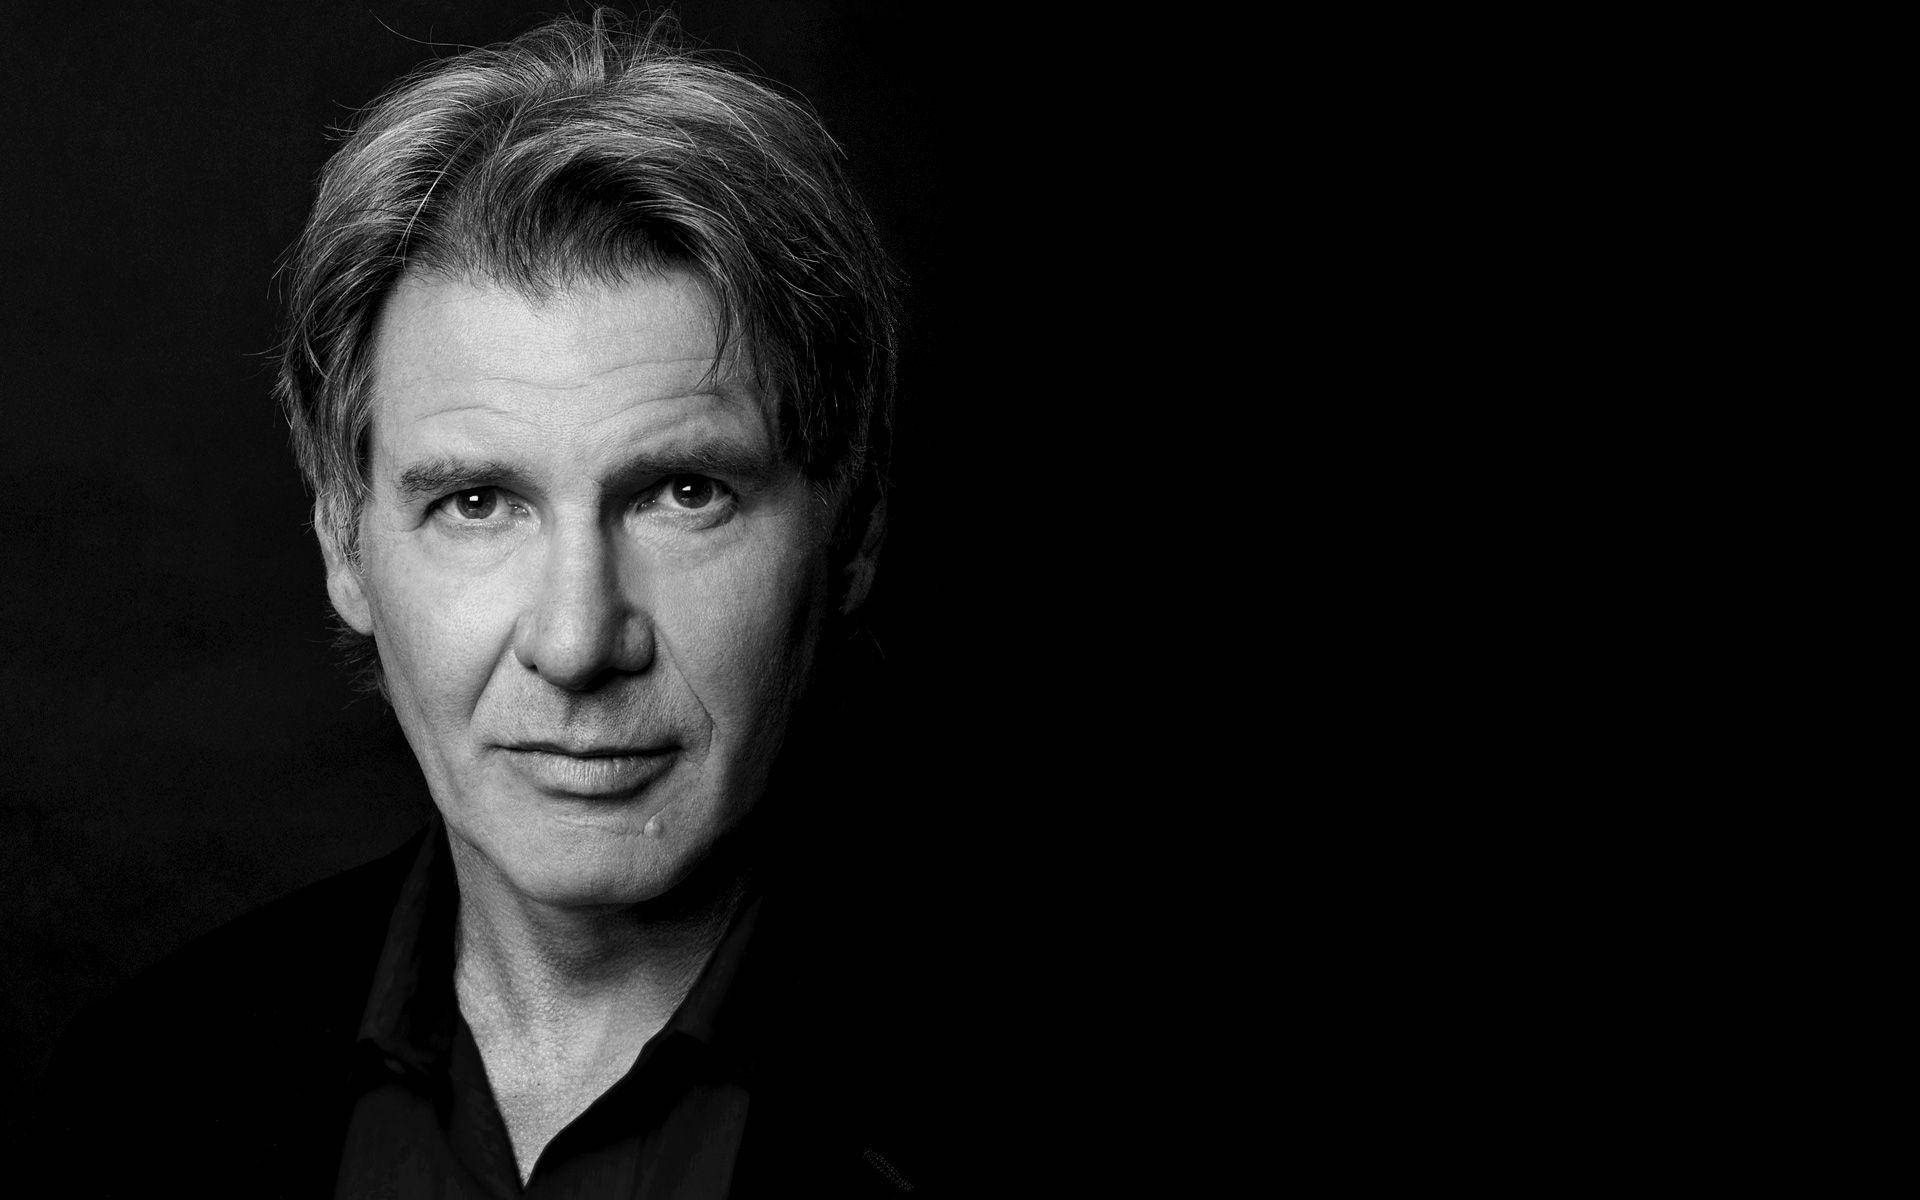 Harrison Ford Portrait Photoshoot Wallpaper